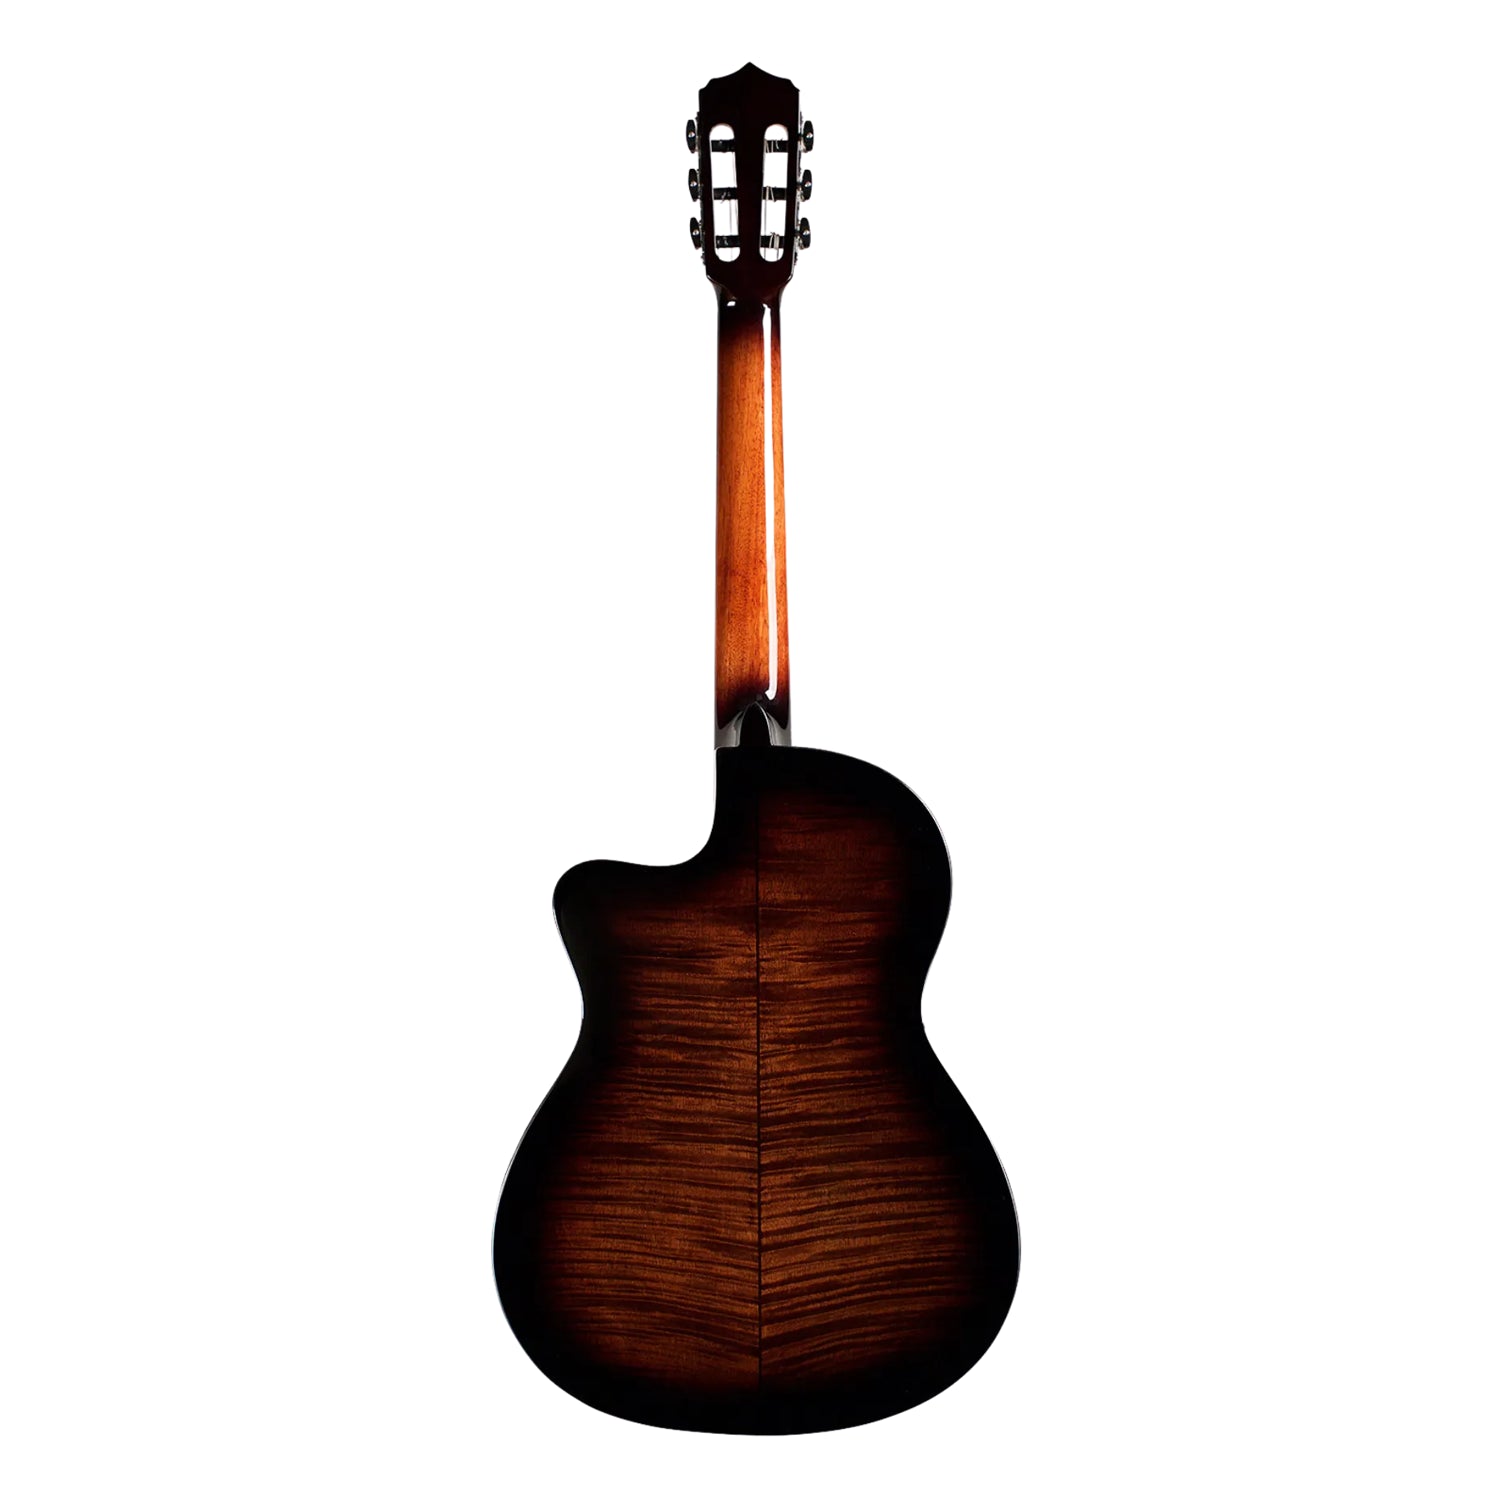 Córdoba Fusion 5 Acoustic Guitar - Sonata Burst